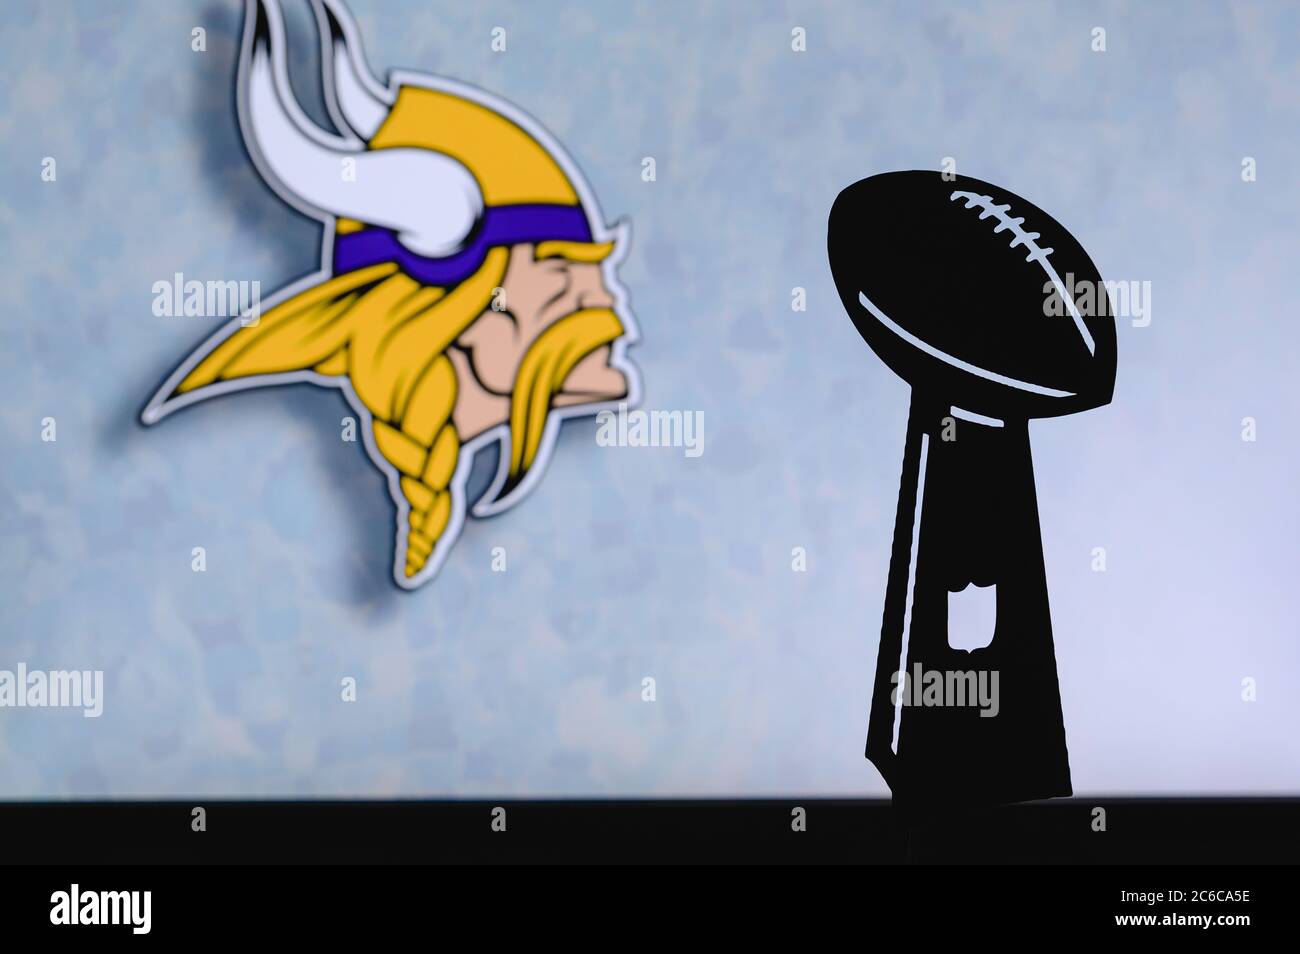 Minnesota Vikings professional american football club, silhouette